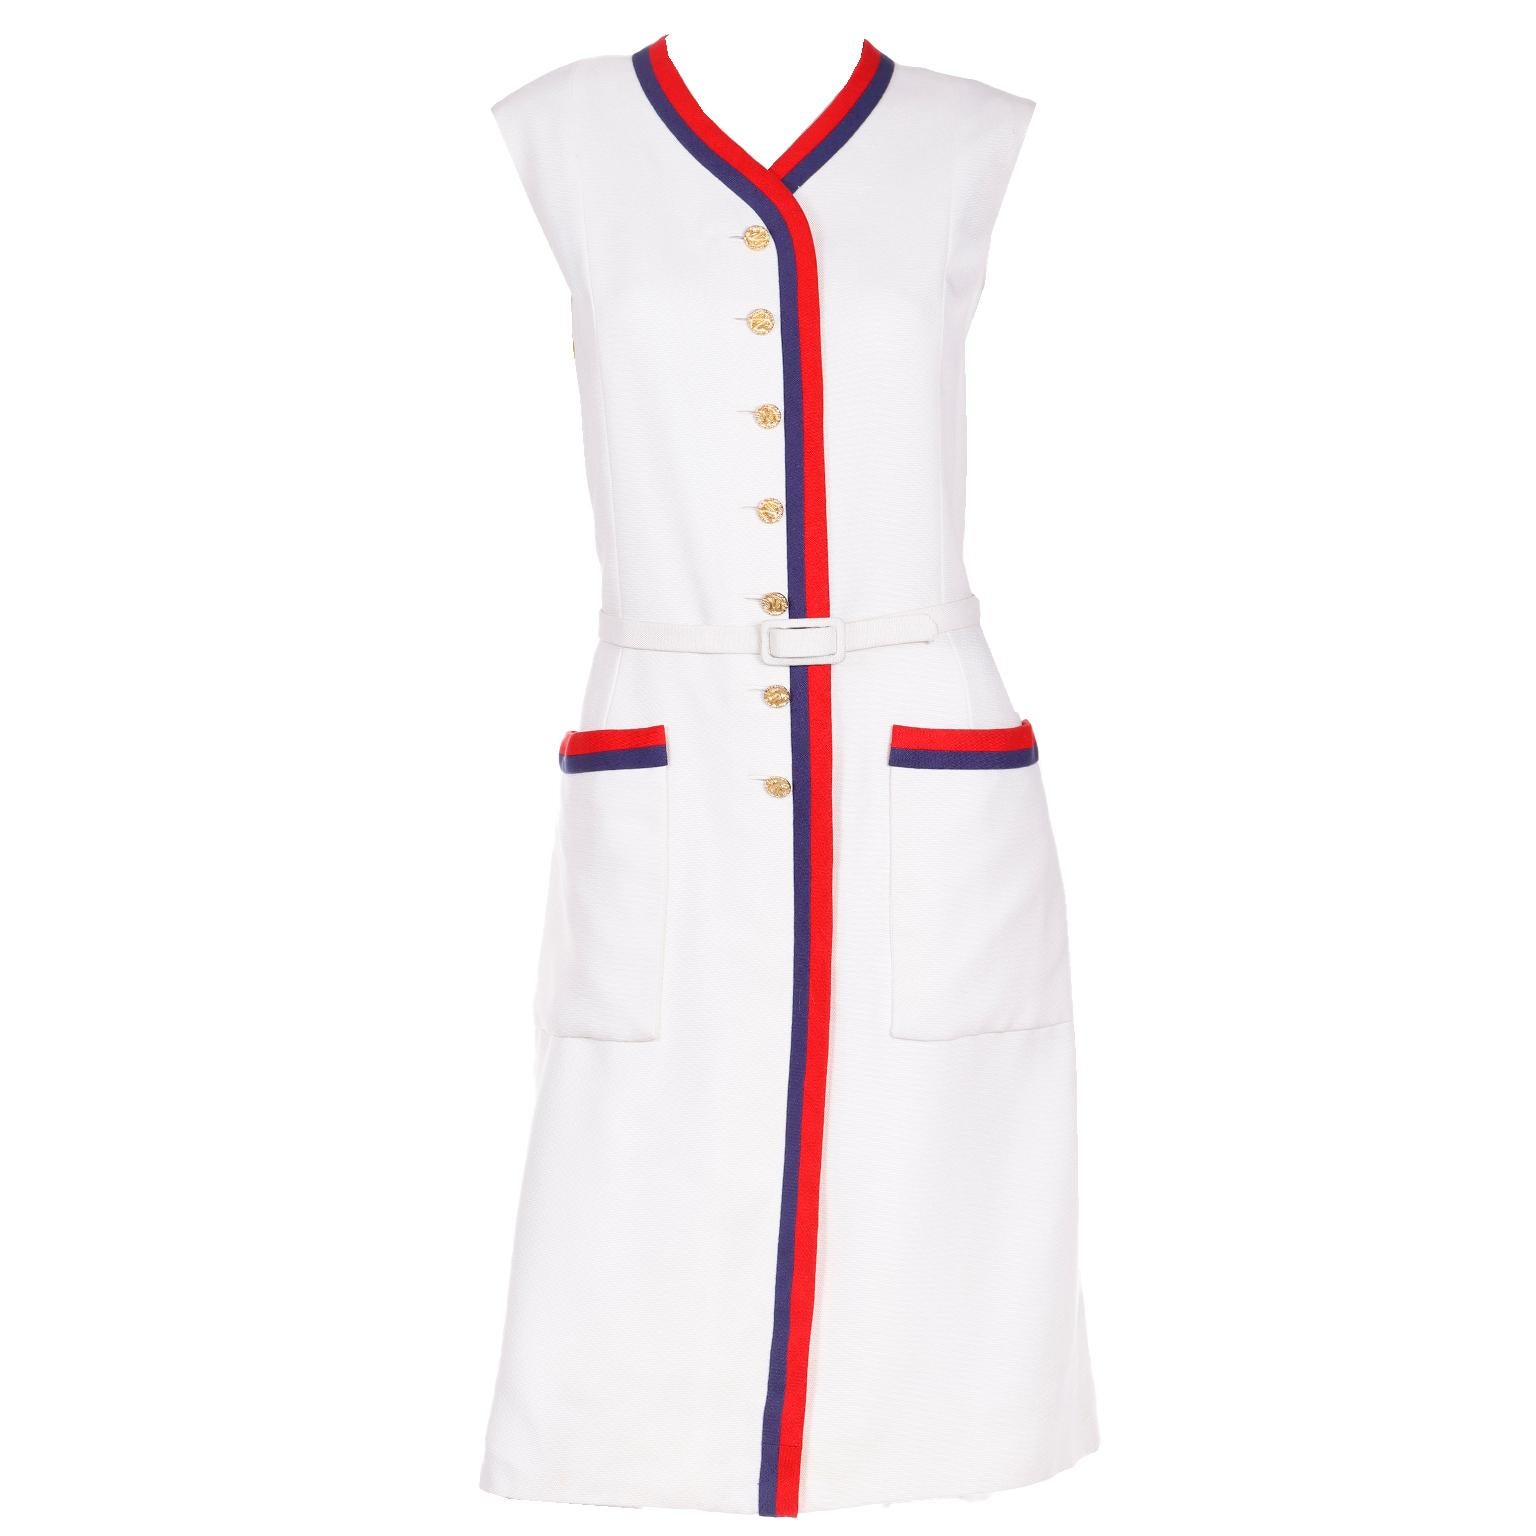 Harvey Berin Karen Stark Vintage 1960s White Dress w Red & Blue Trim and Belt For Sale 7